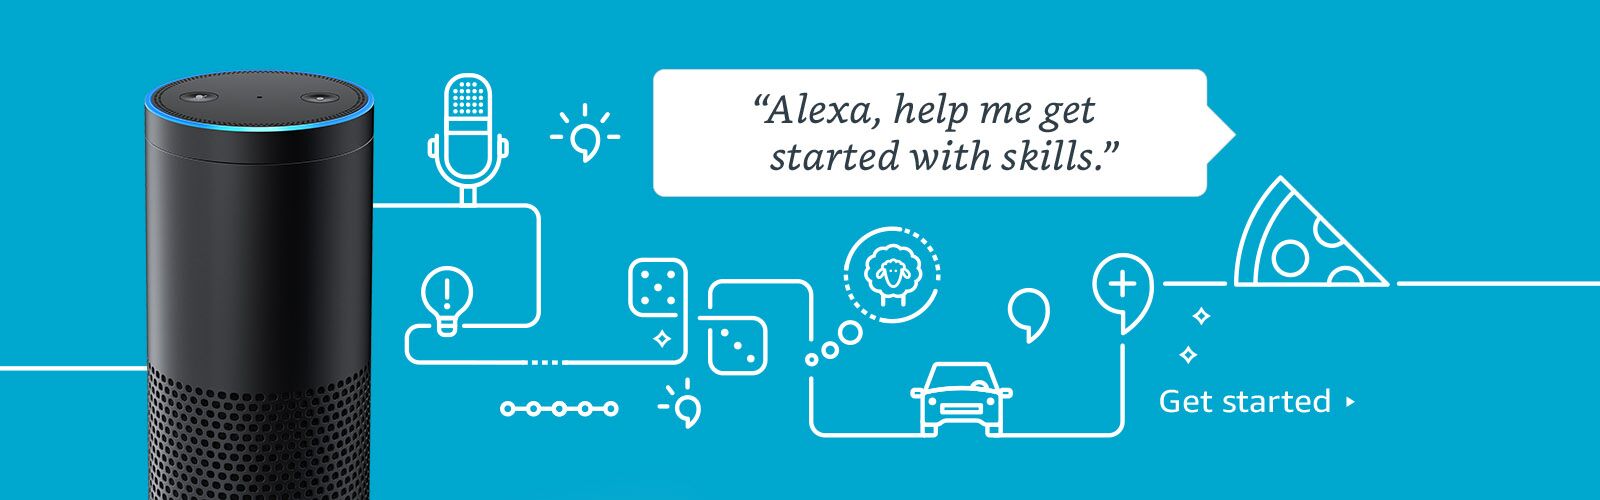 Alexa Get Started Skills Banner